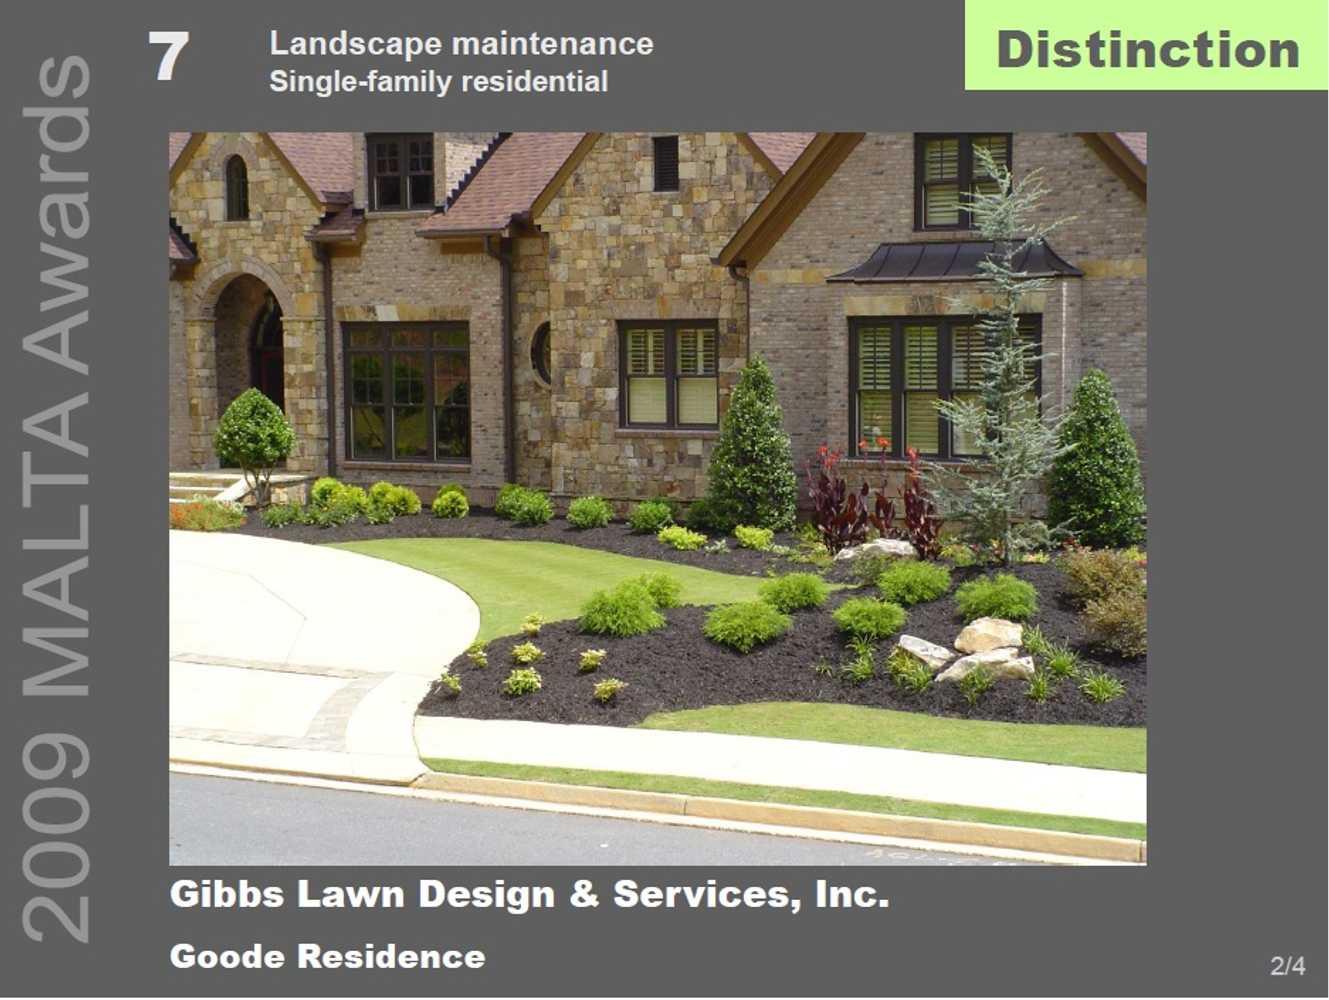 2009 Landscape Maintenance Awards 